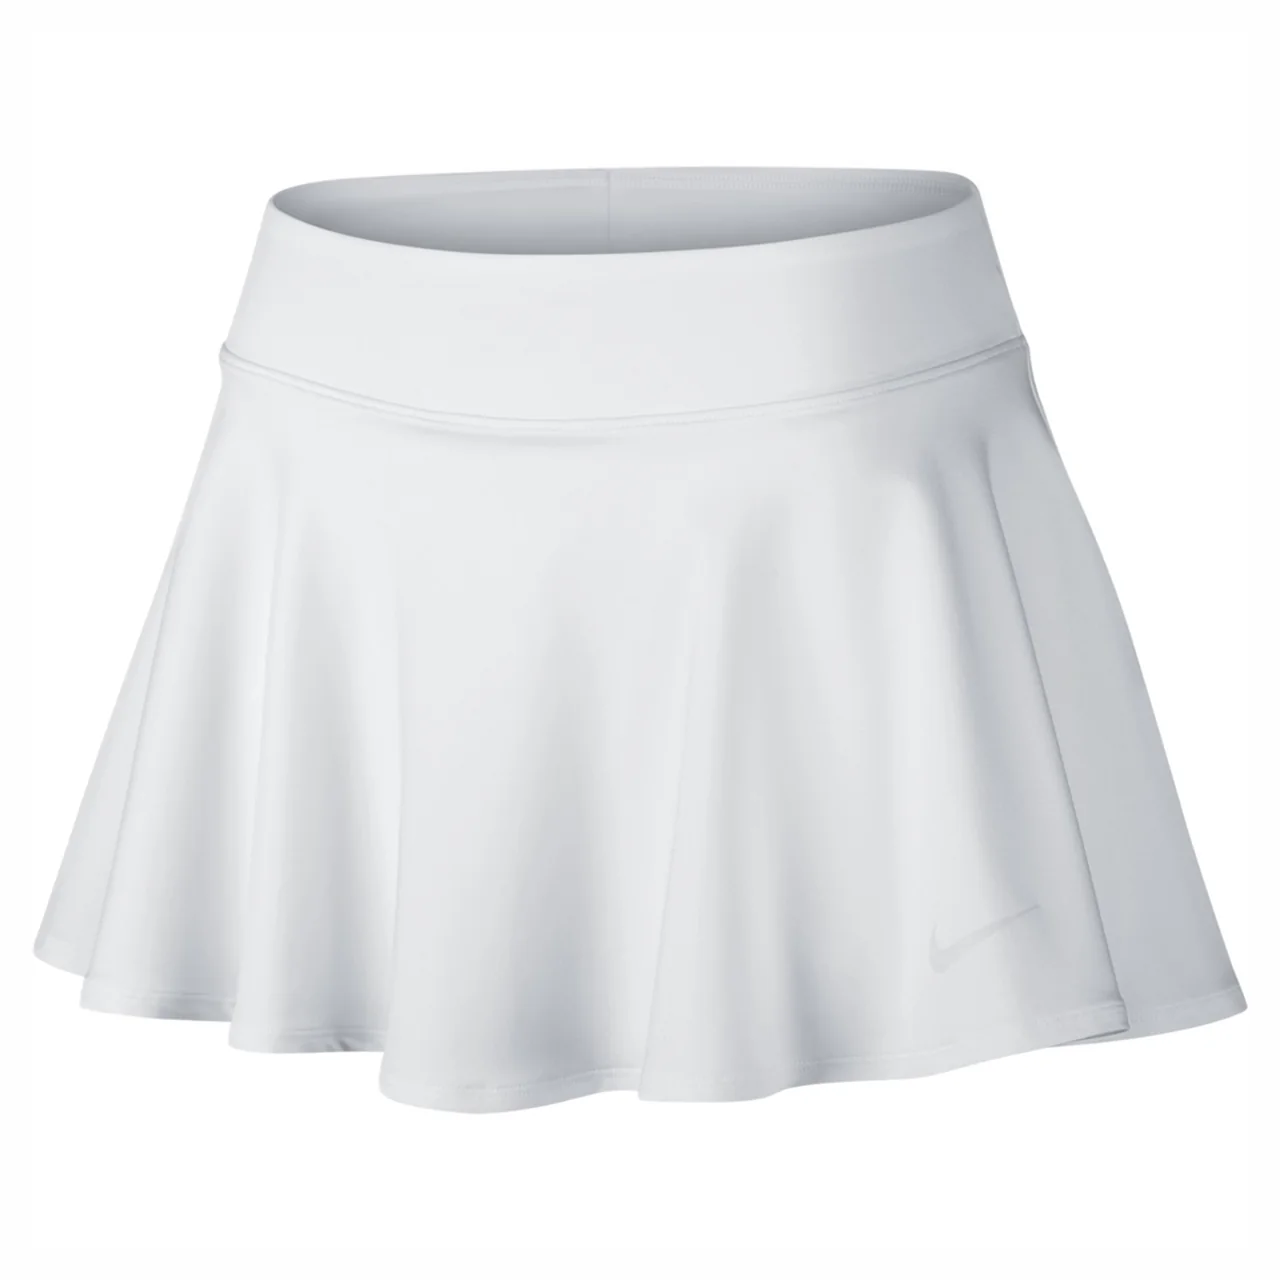 Nike Baseline Skirt White Size L